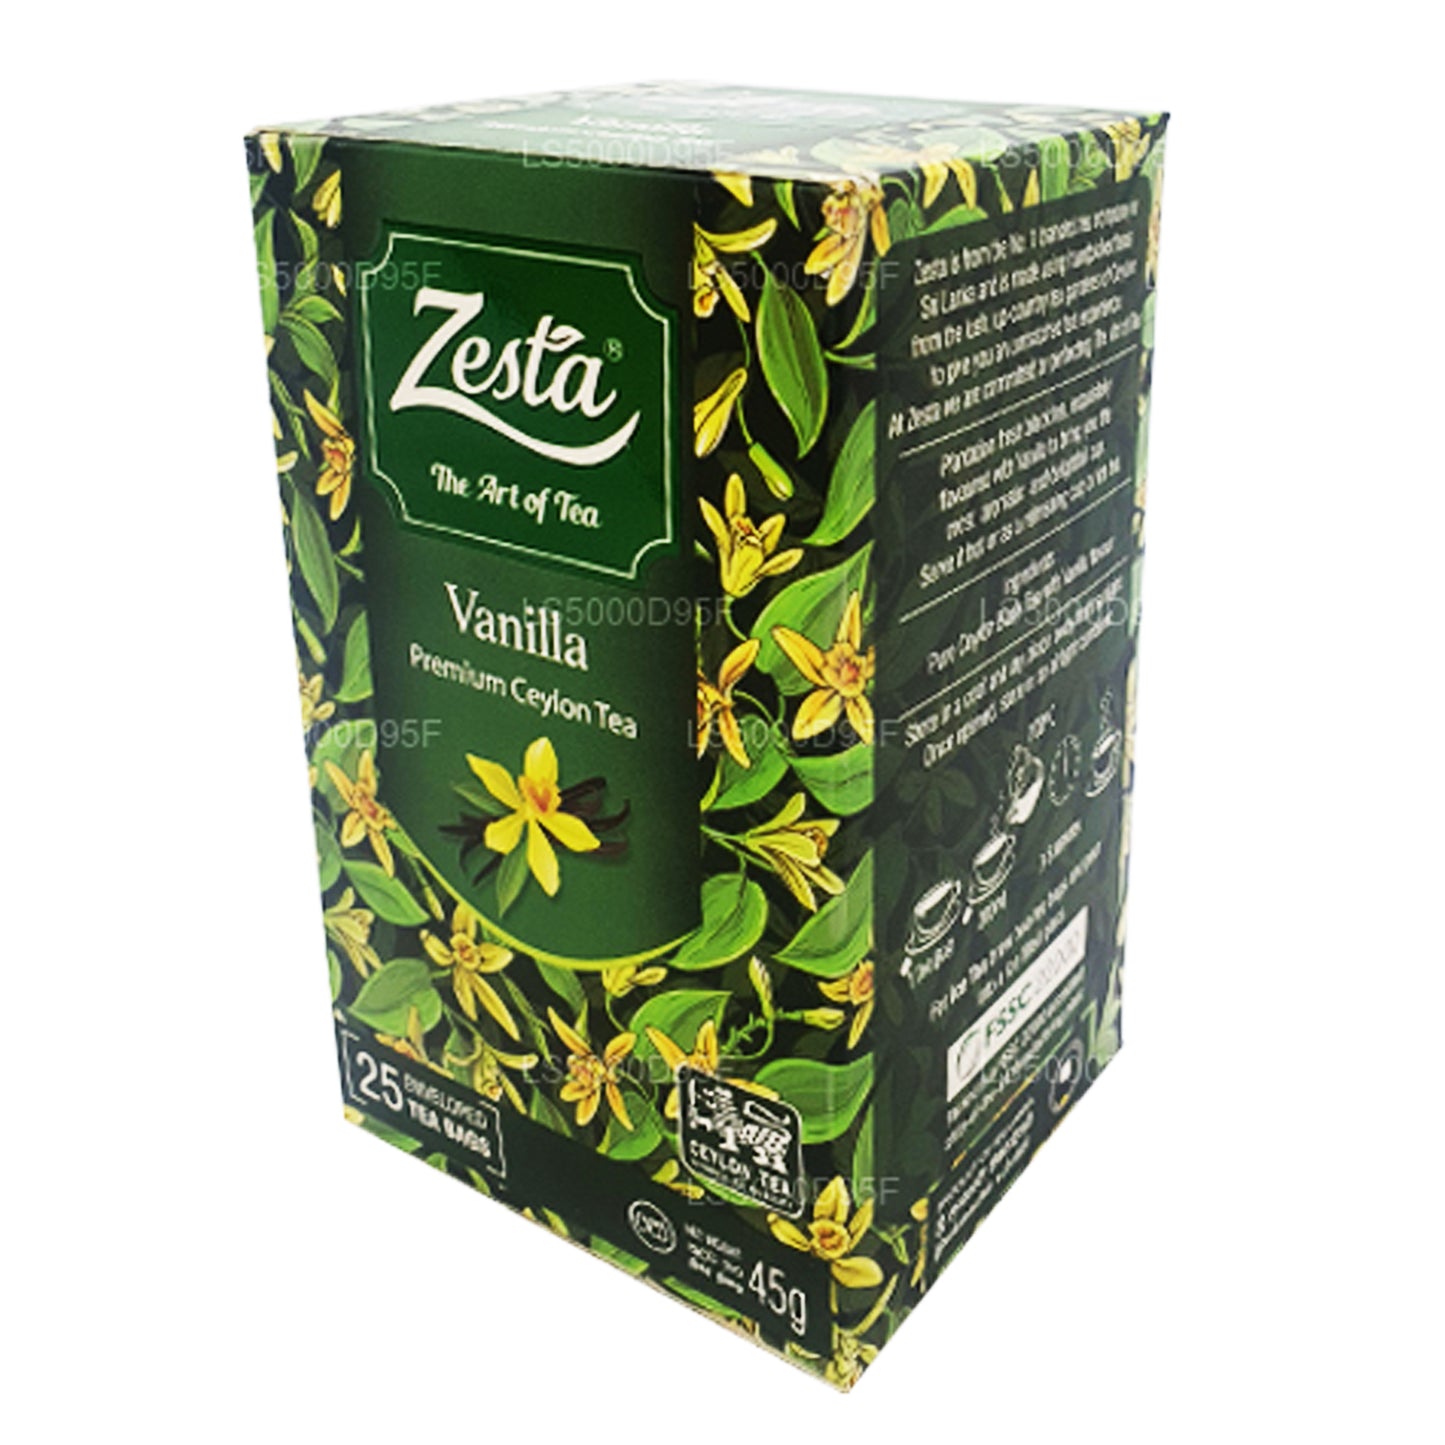 Zesta 香草红茶 (45g) 25 茶包